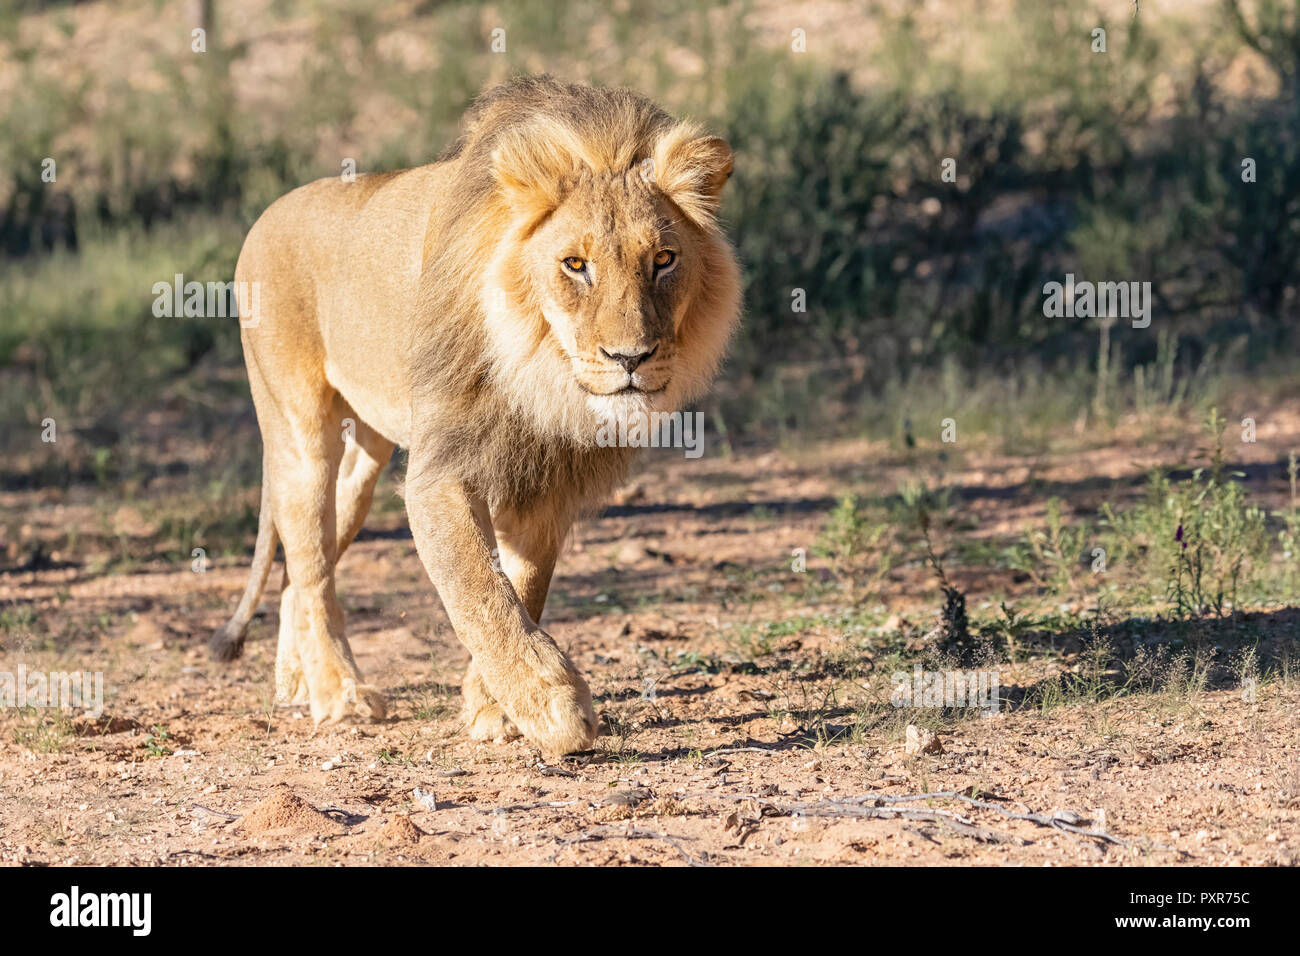 Botswana, Kgalagadi Transfrontier Park, lion, Panthera leo, walking Stock Photo